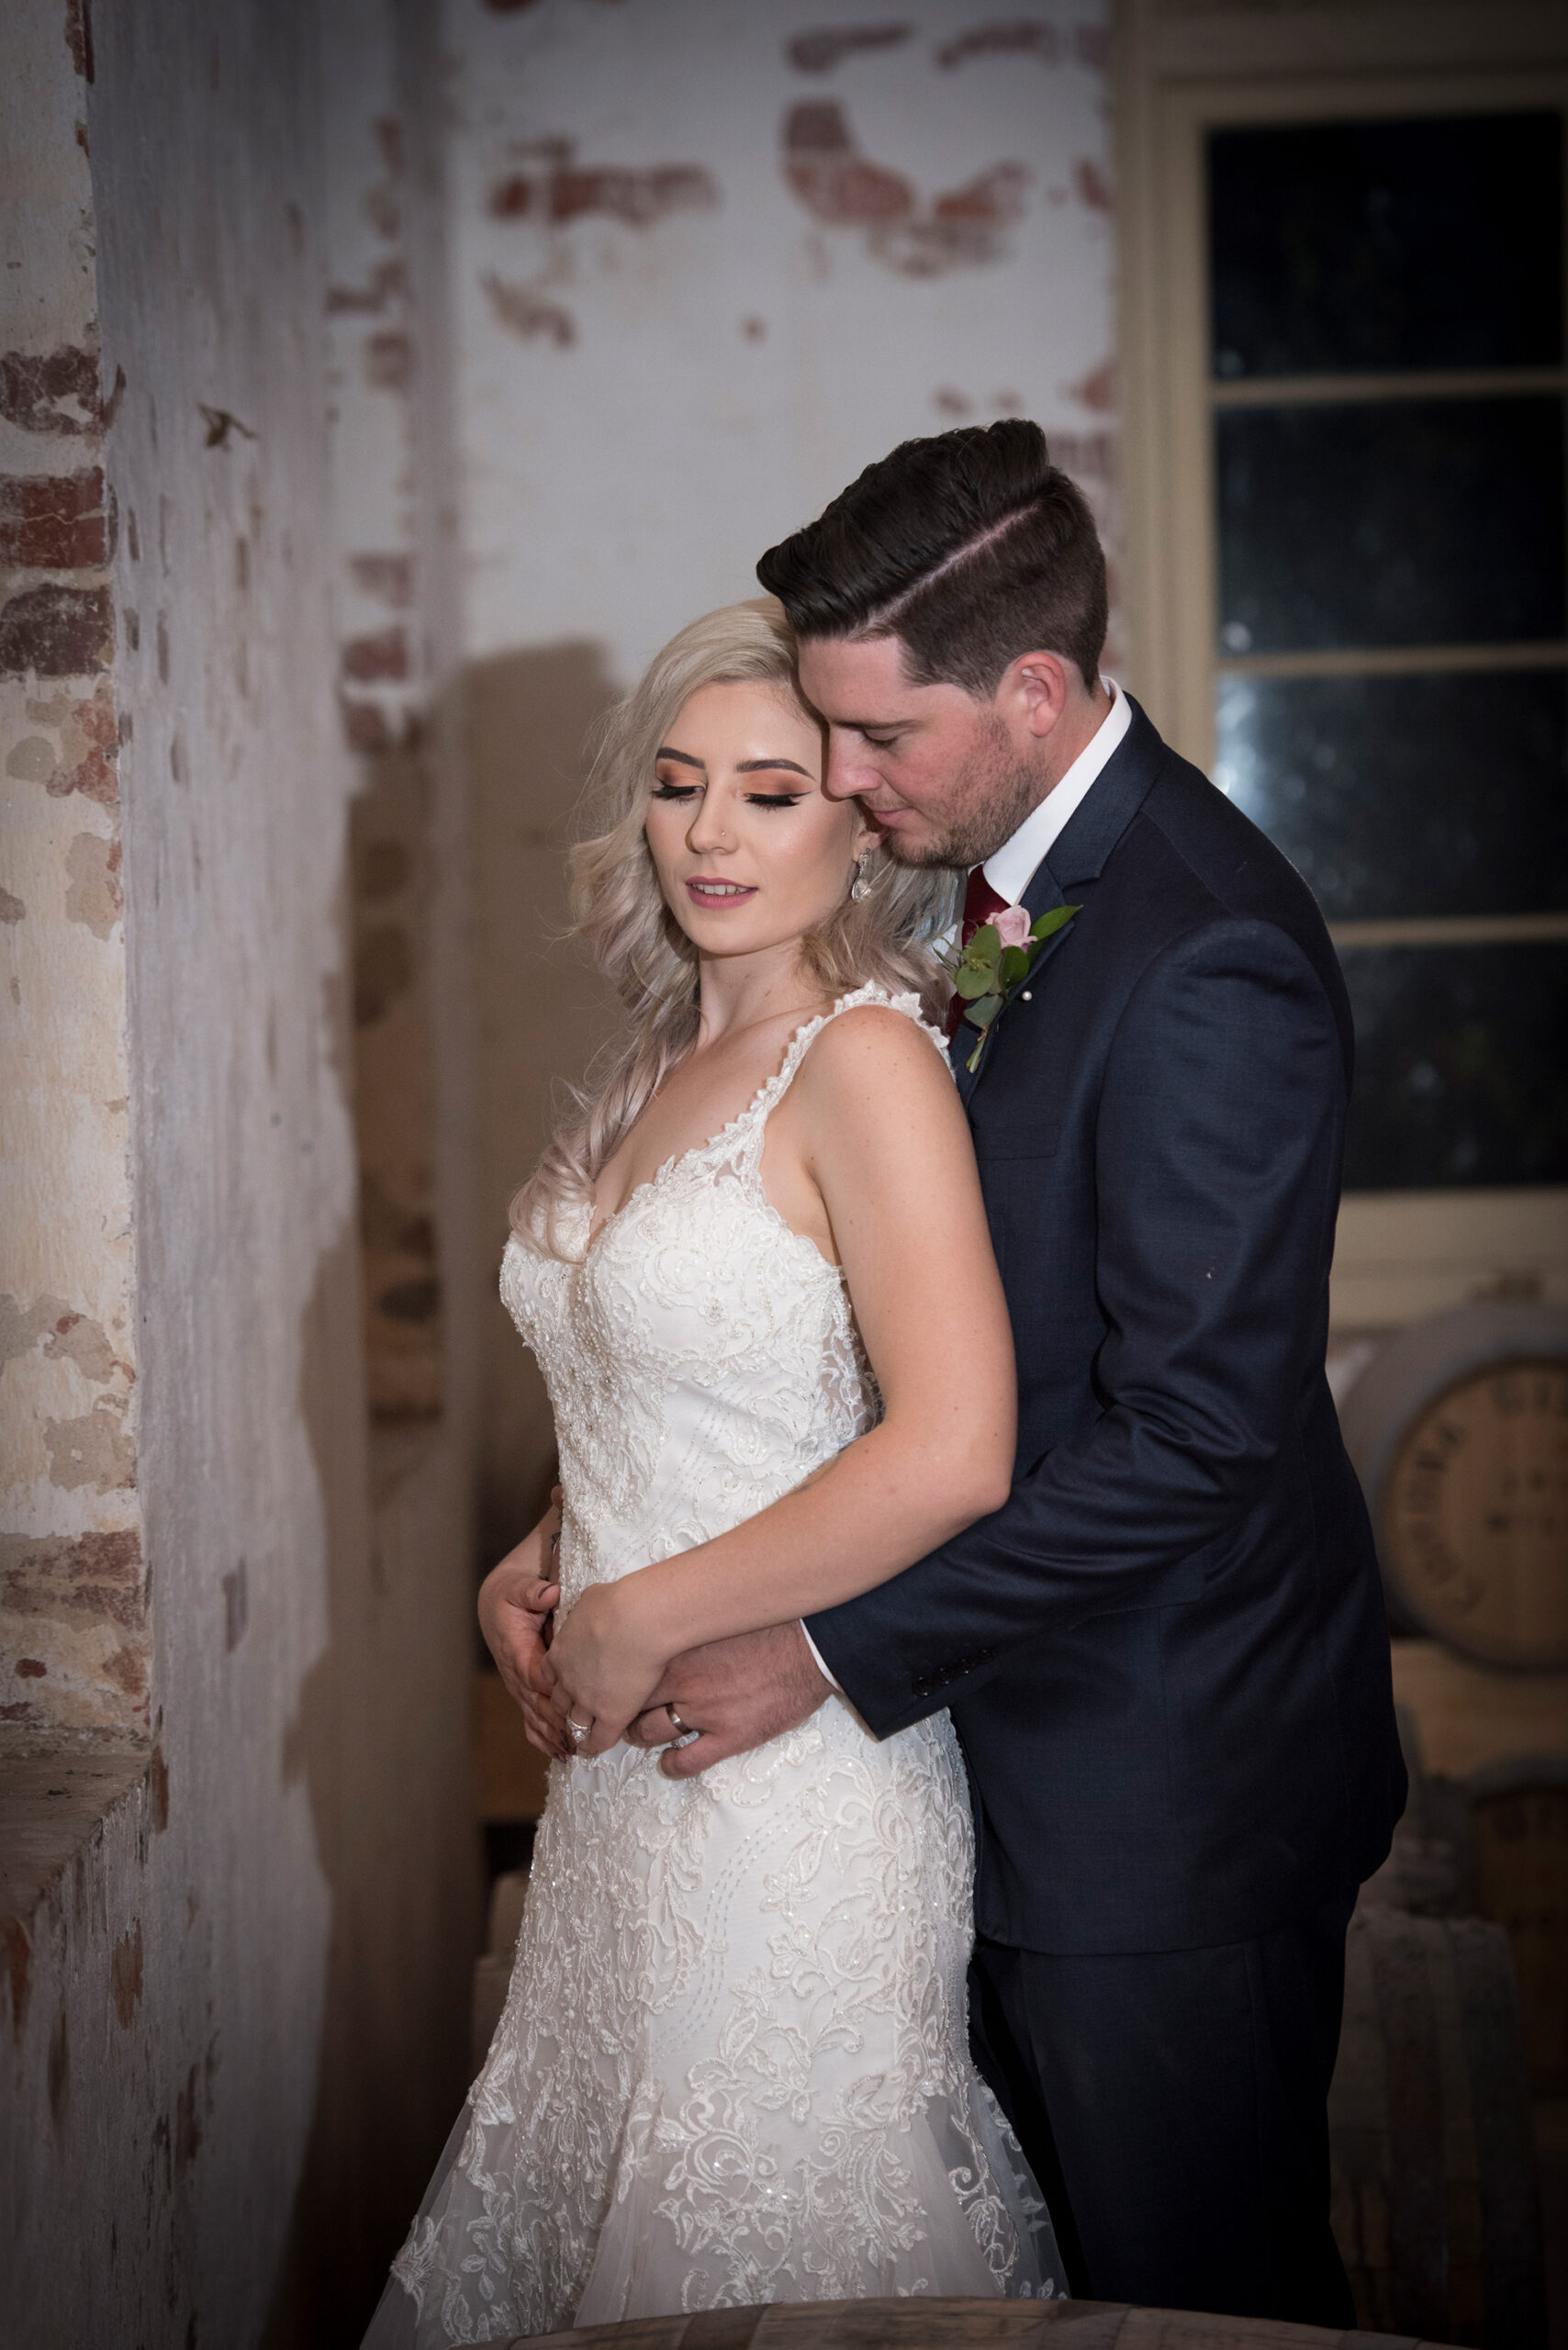 Tegan Matt Romantic Rustic Wedding Sue Davis Photography 031 scaled